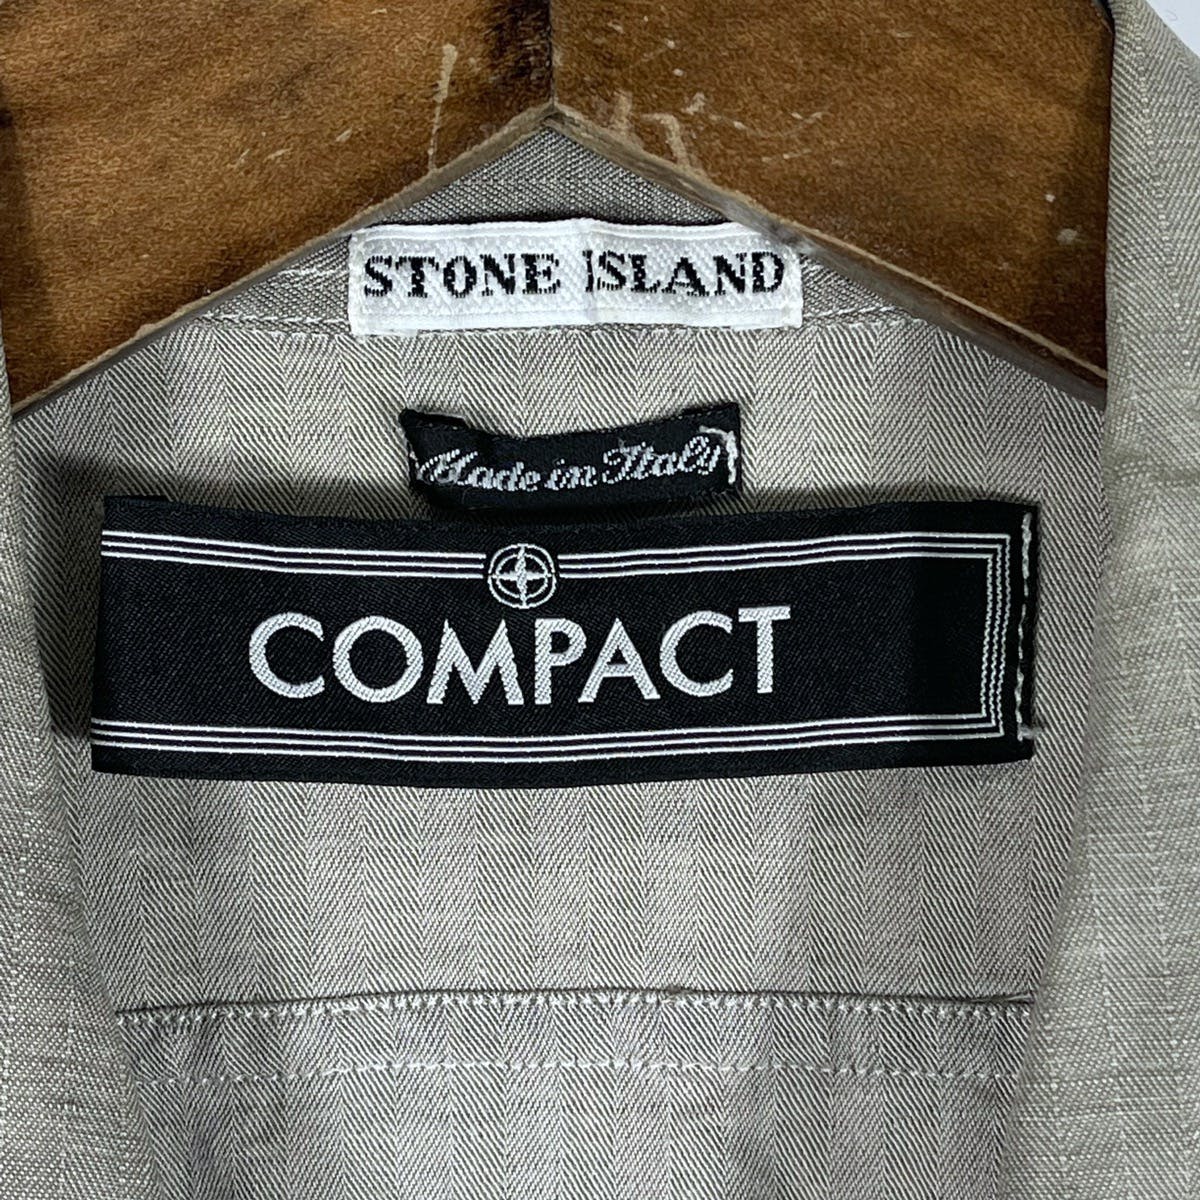 Vintage Stone Island Compact Over Shirt - 8